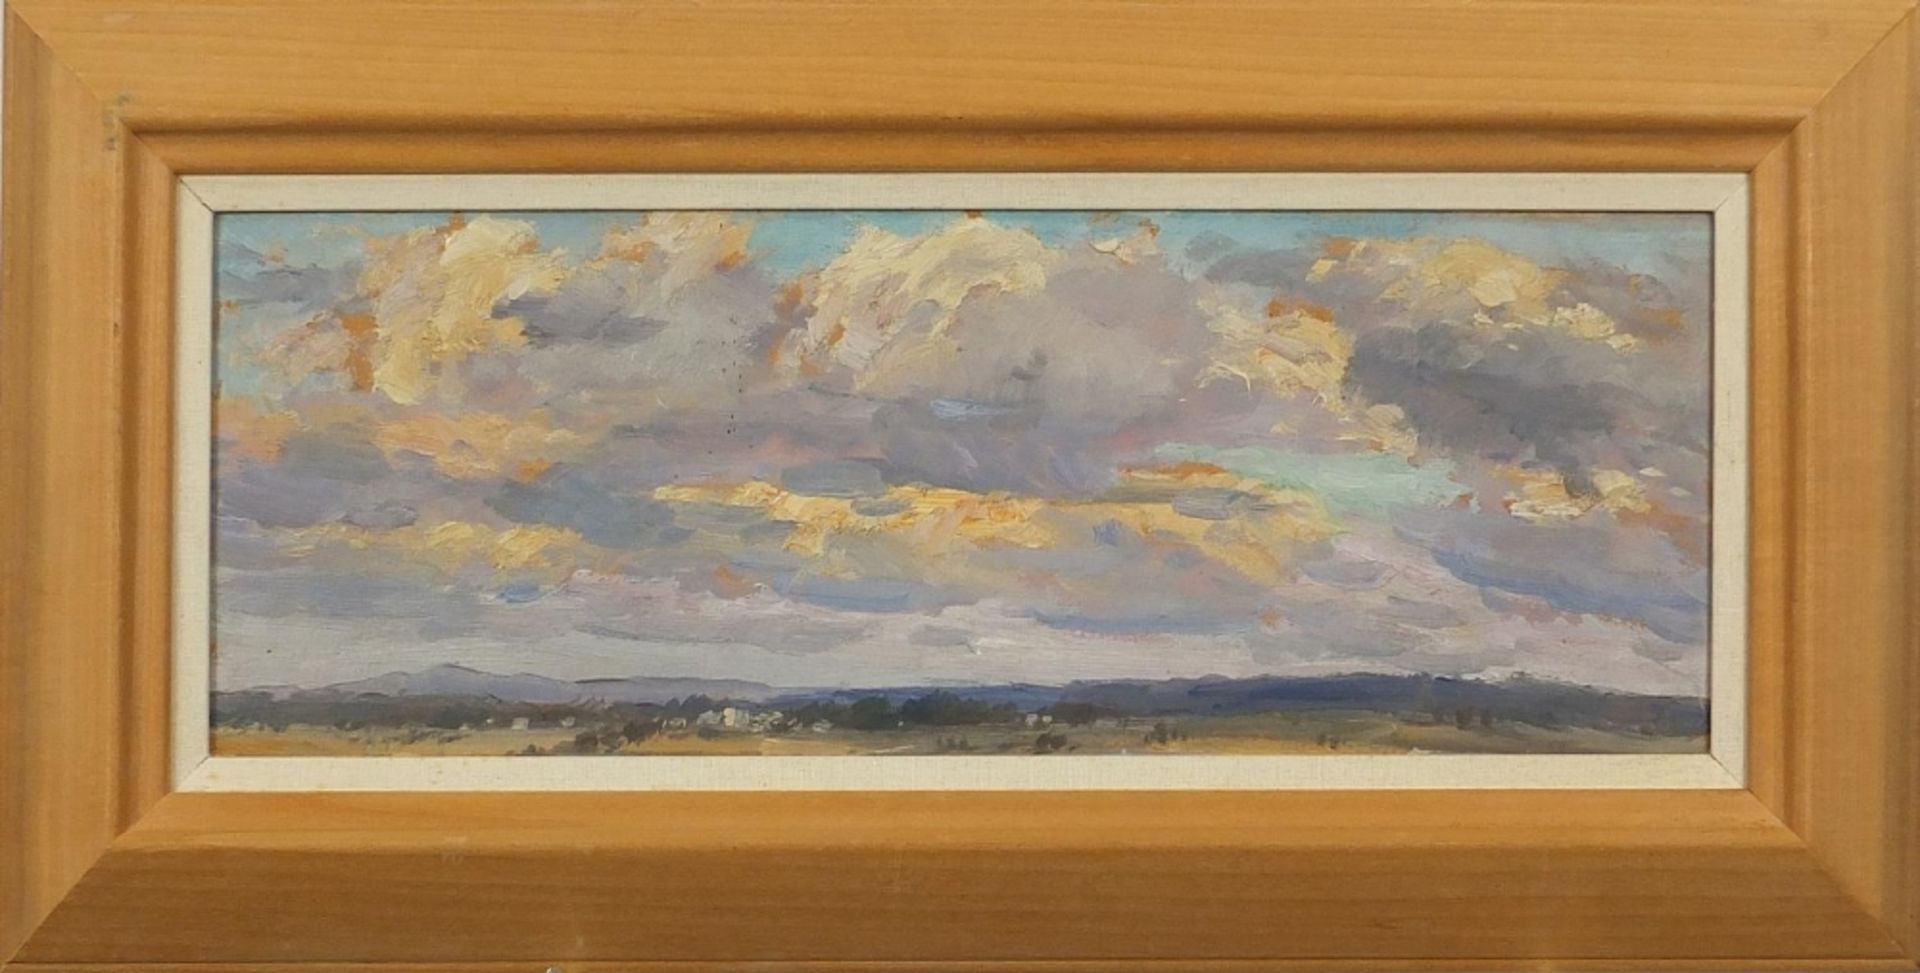 Rural landscape, Impressionist oil on board, mounted and framed, 48.5cm x 17.5cm excluding the mount - Image 2 of 4